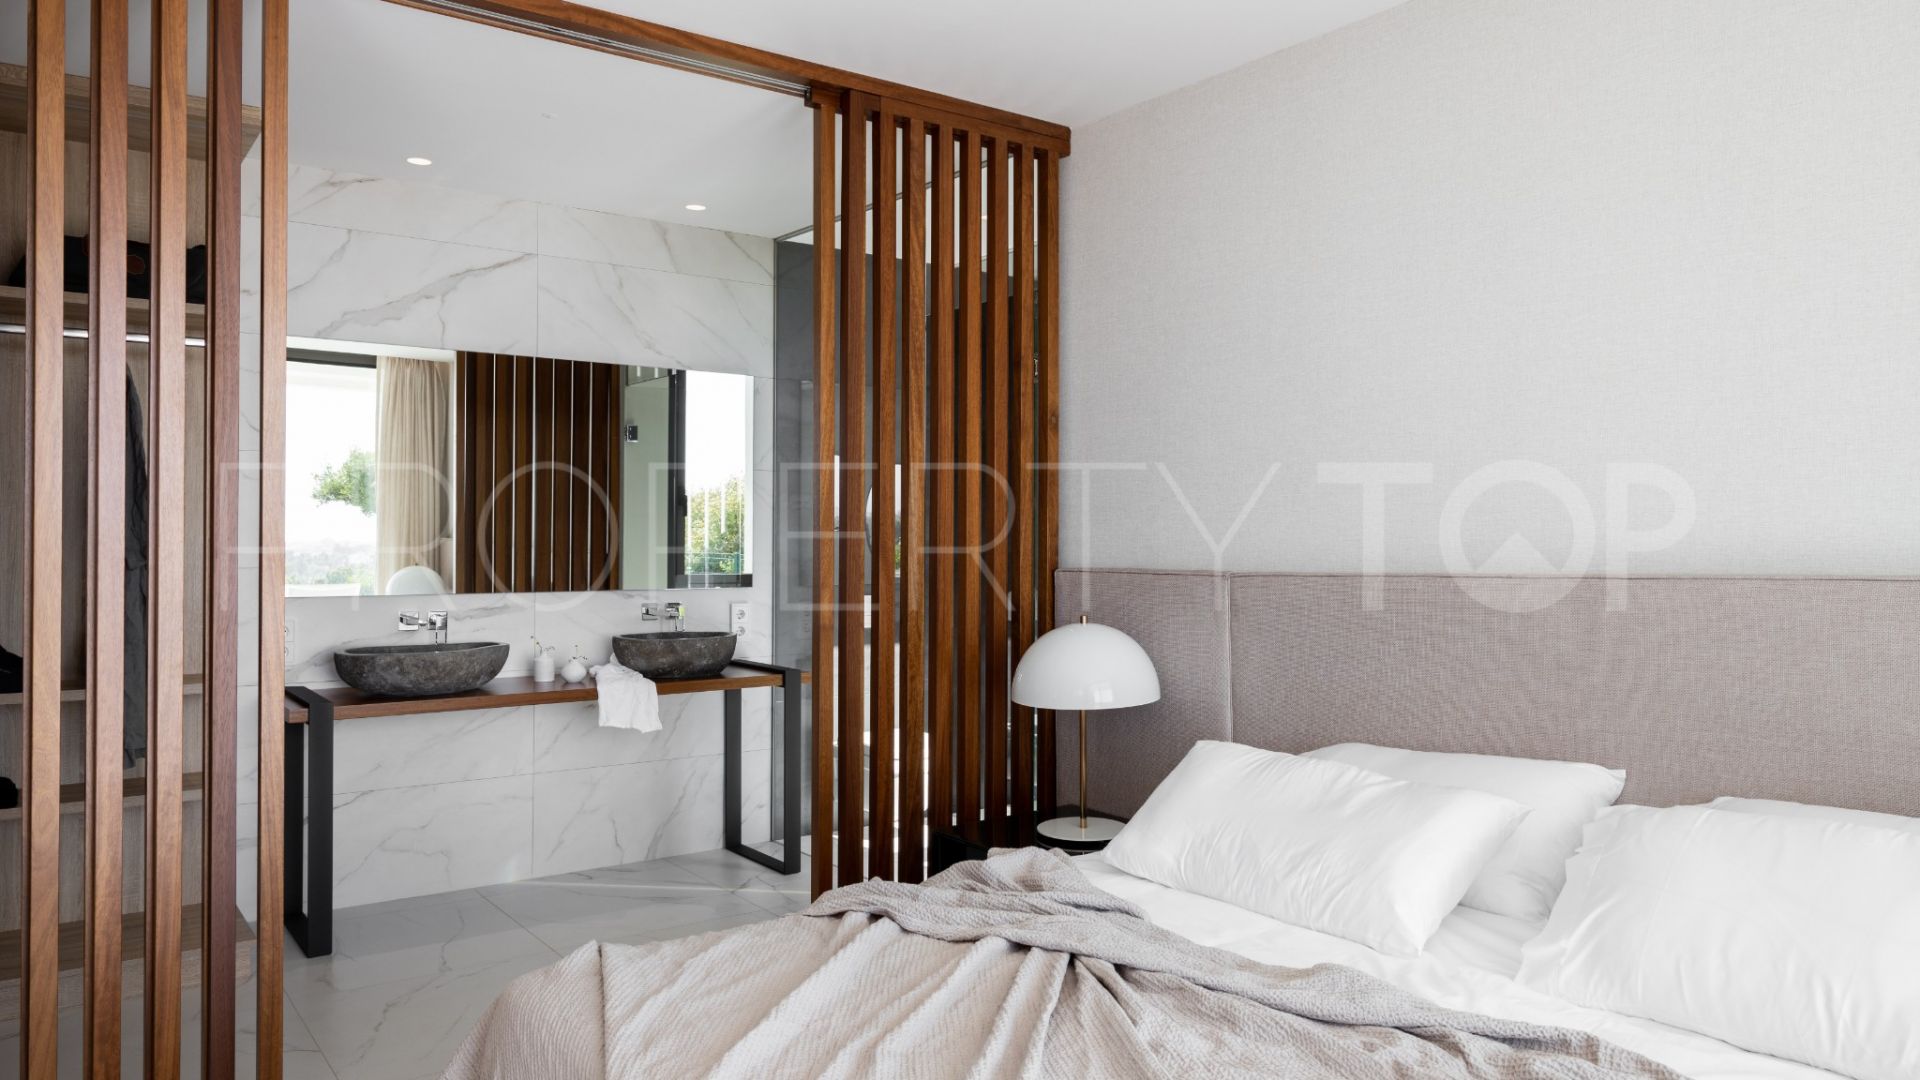 For sale apartment in Mirador del Paraiso with 3 bedrooms